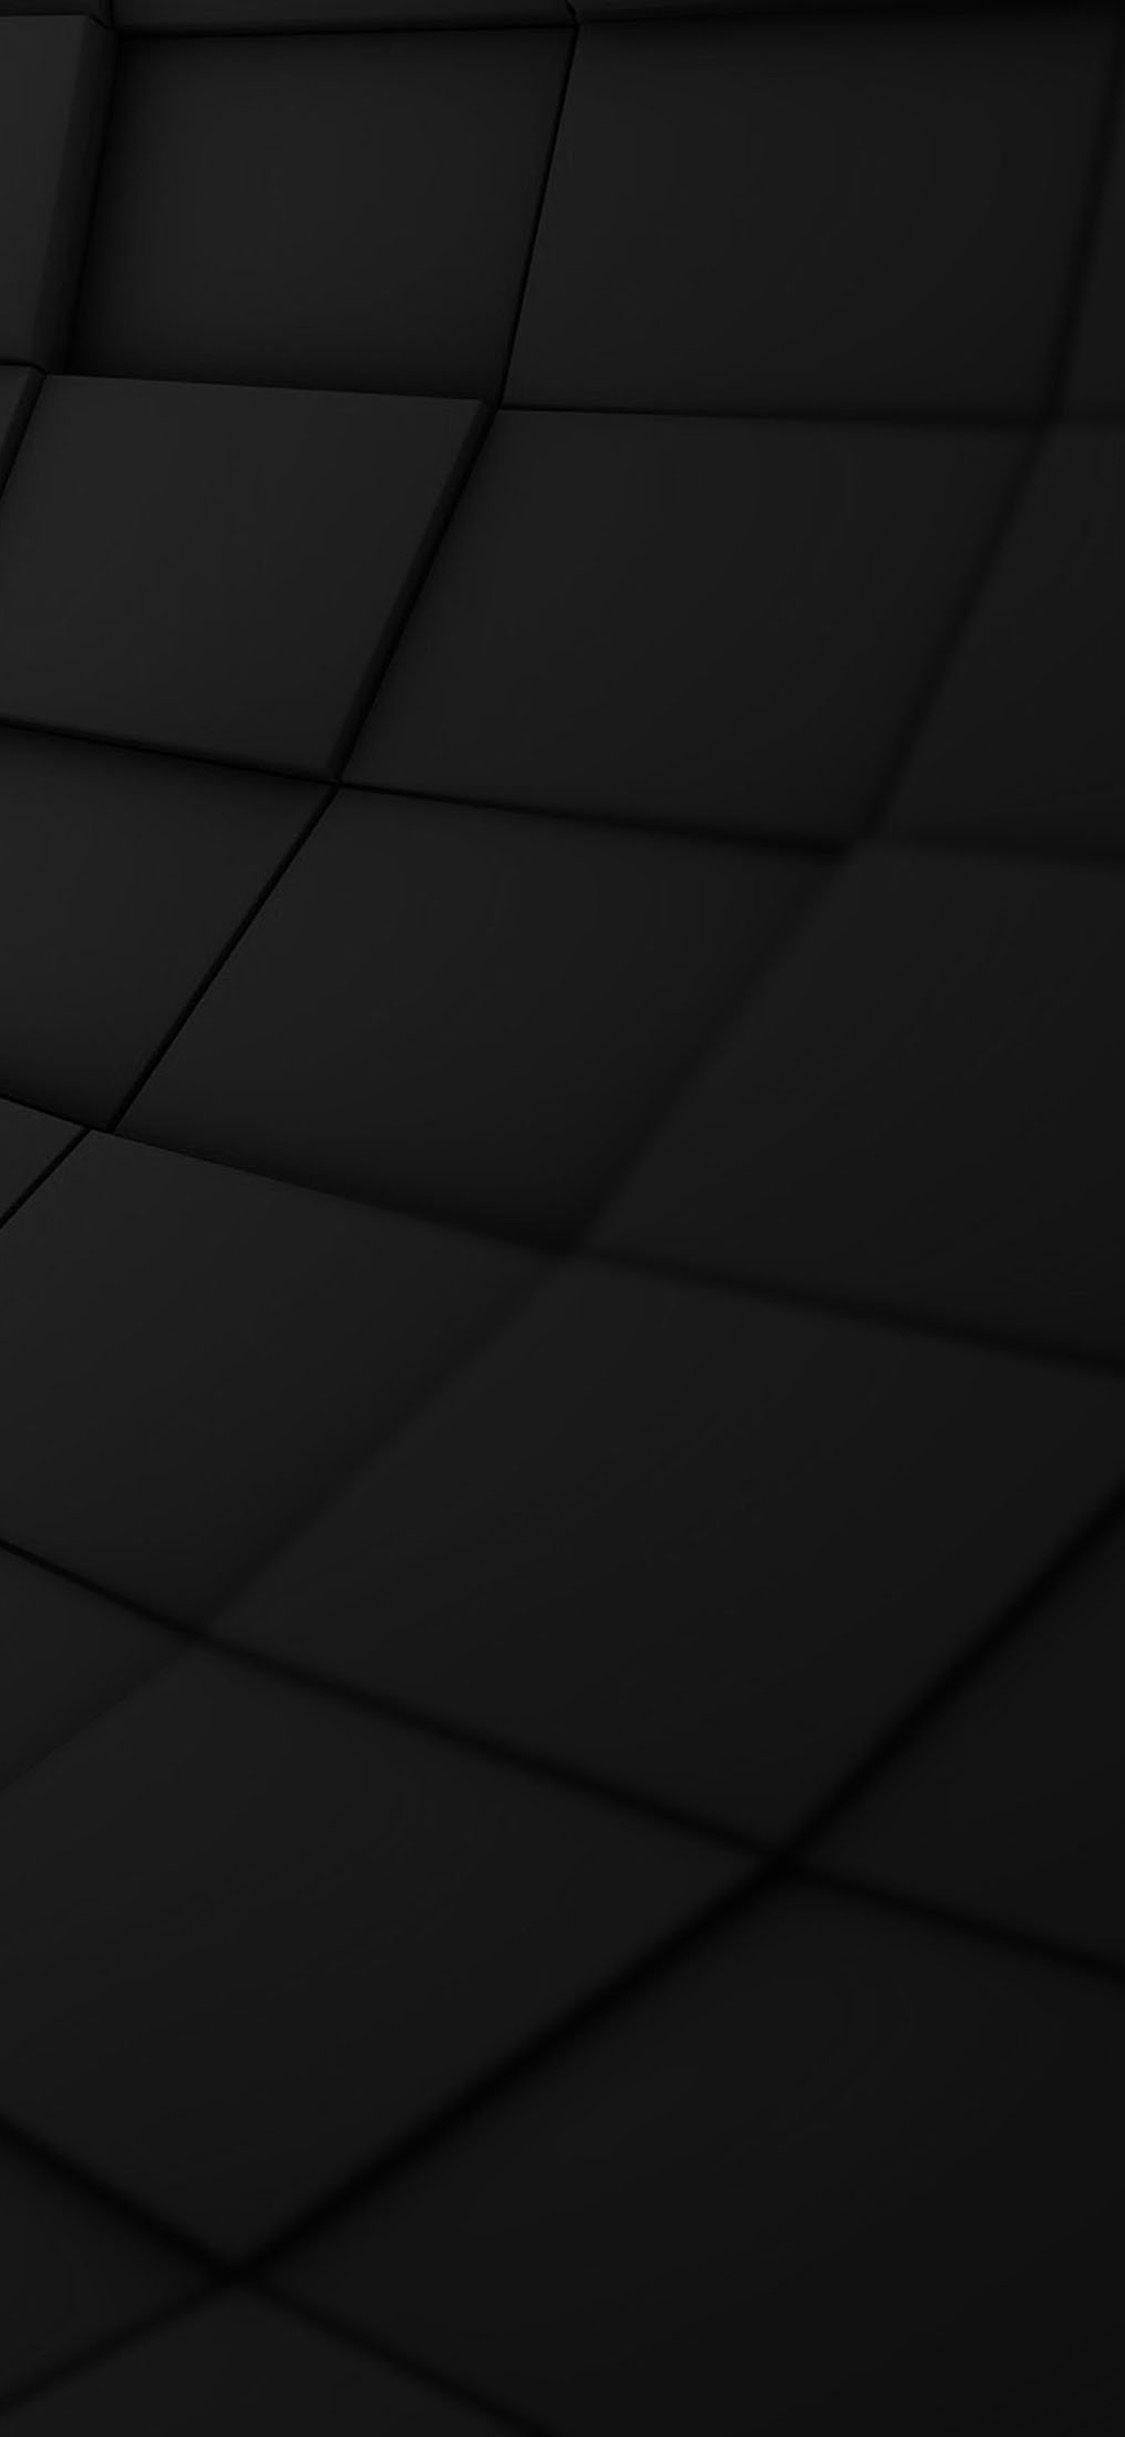 Black 3D Cubes iPhone Wallpapers - Wallpaper Cave